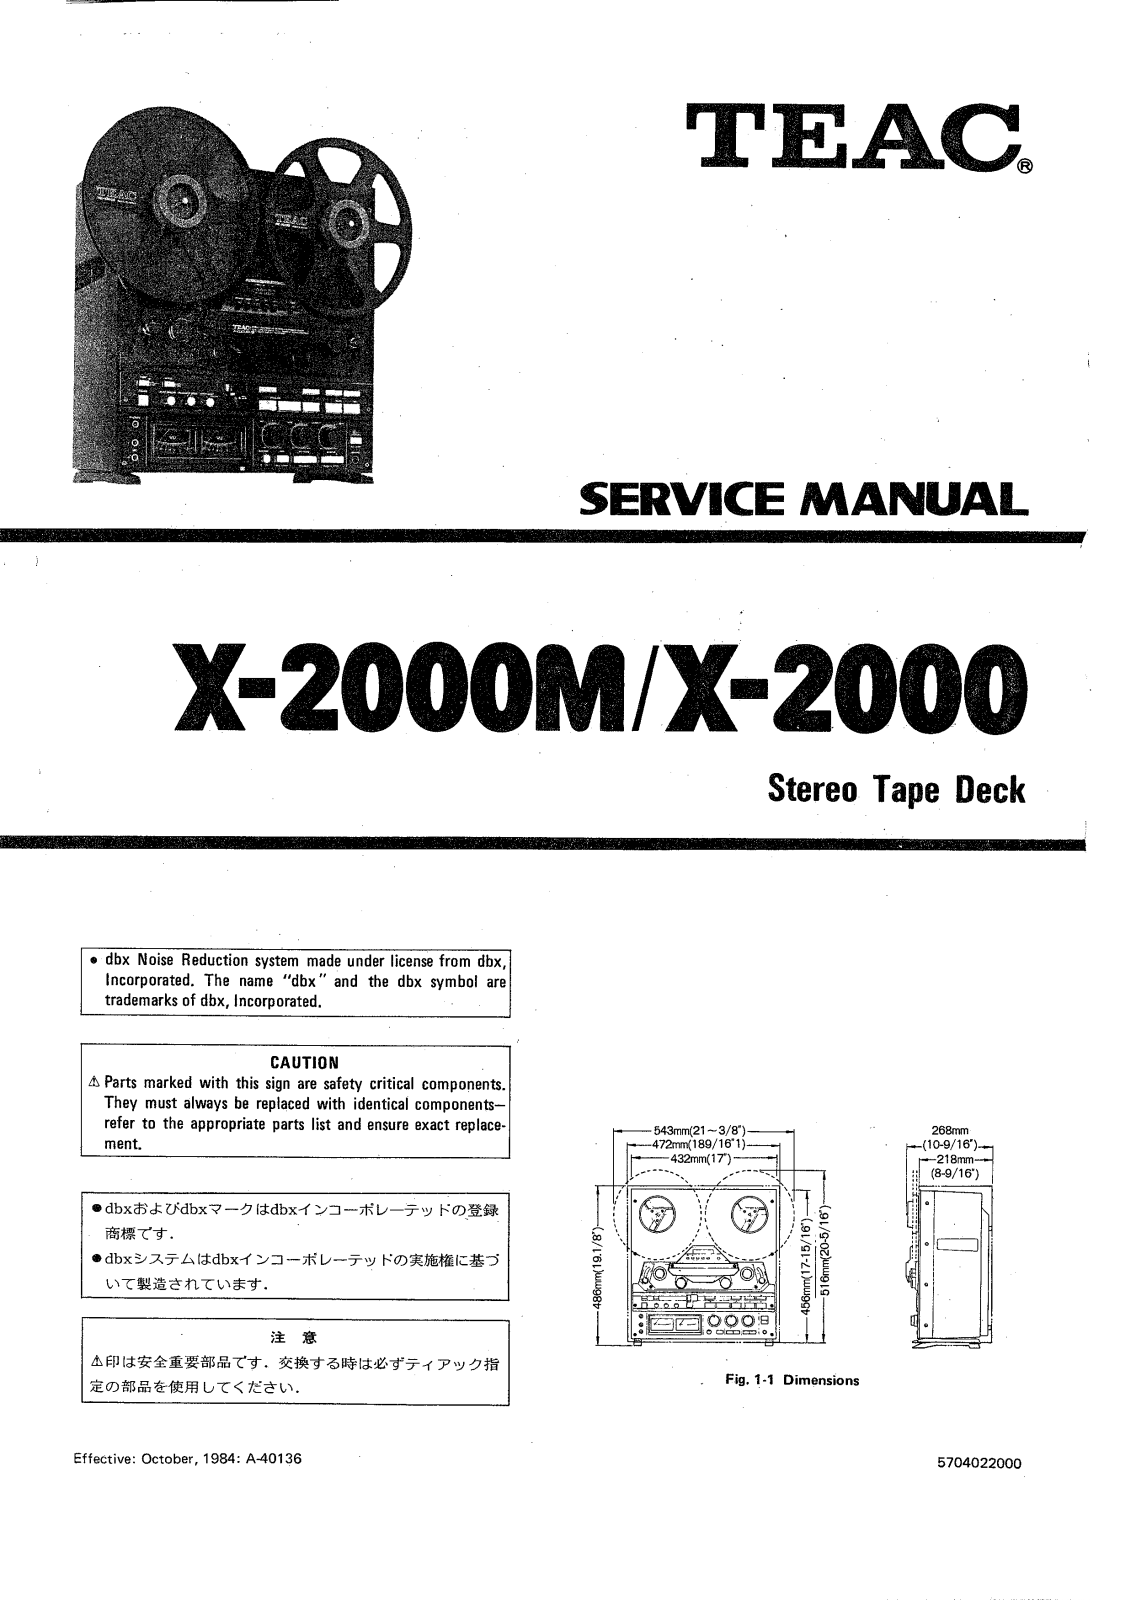 Teac x2000, x2000m Service Manual